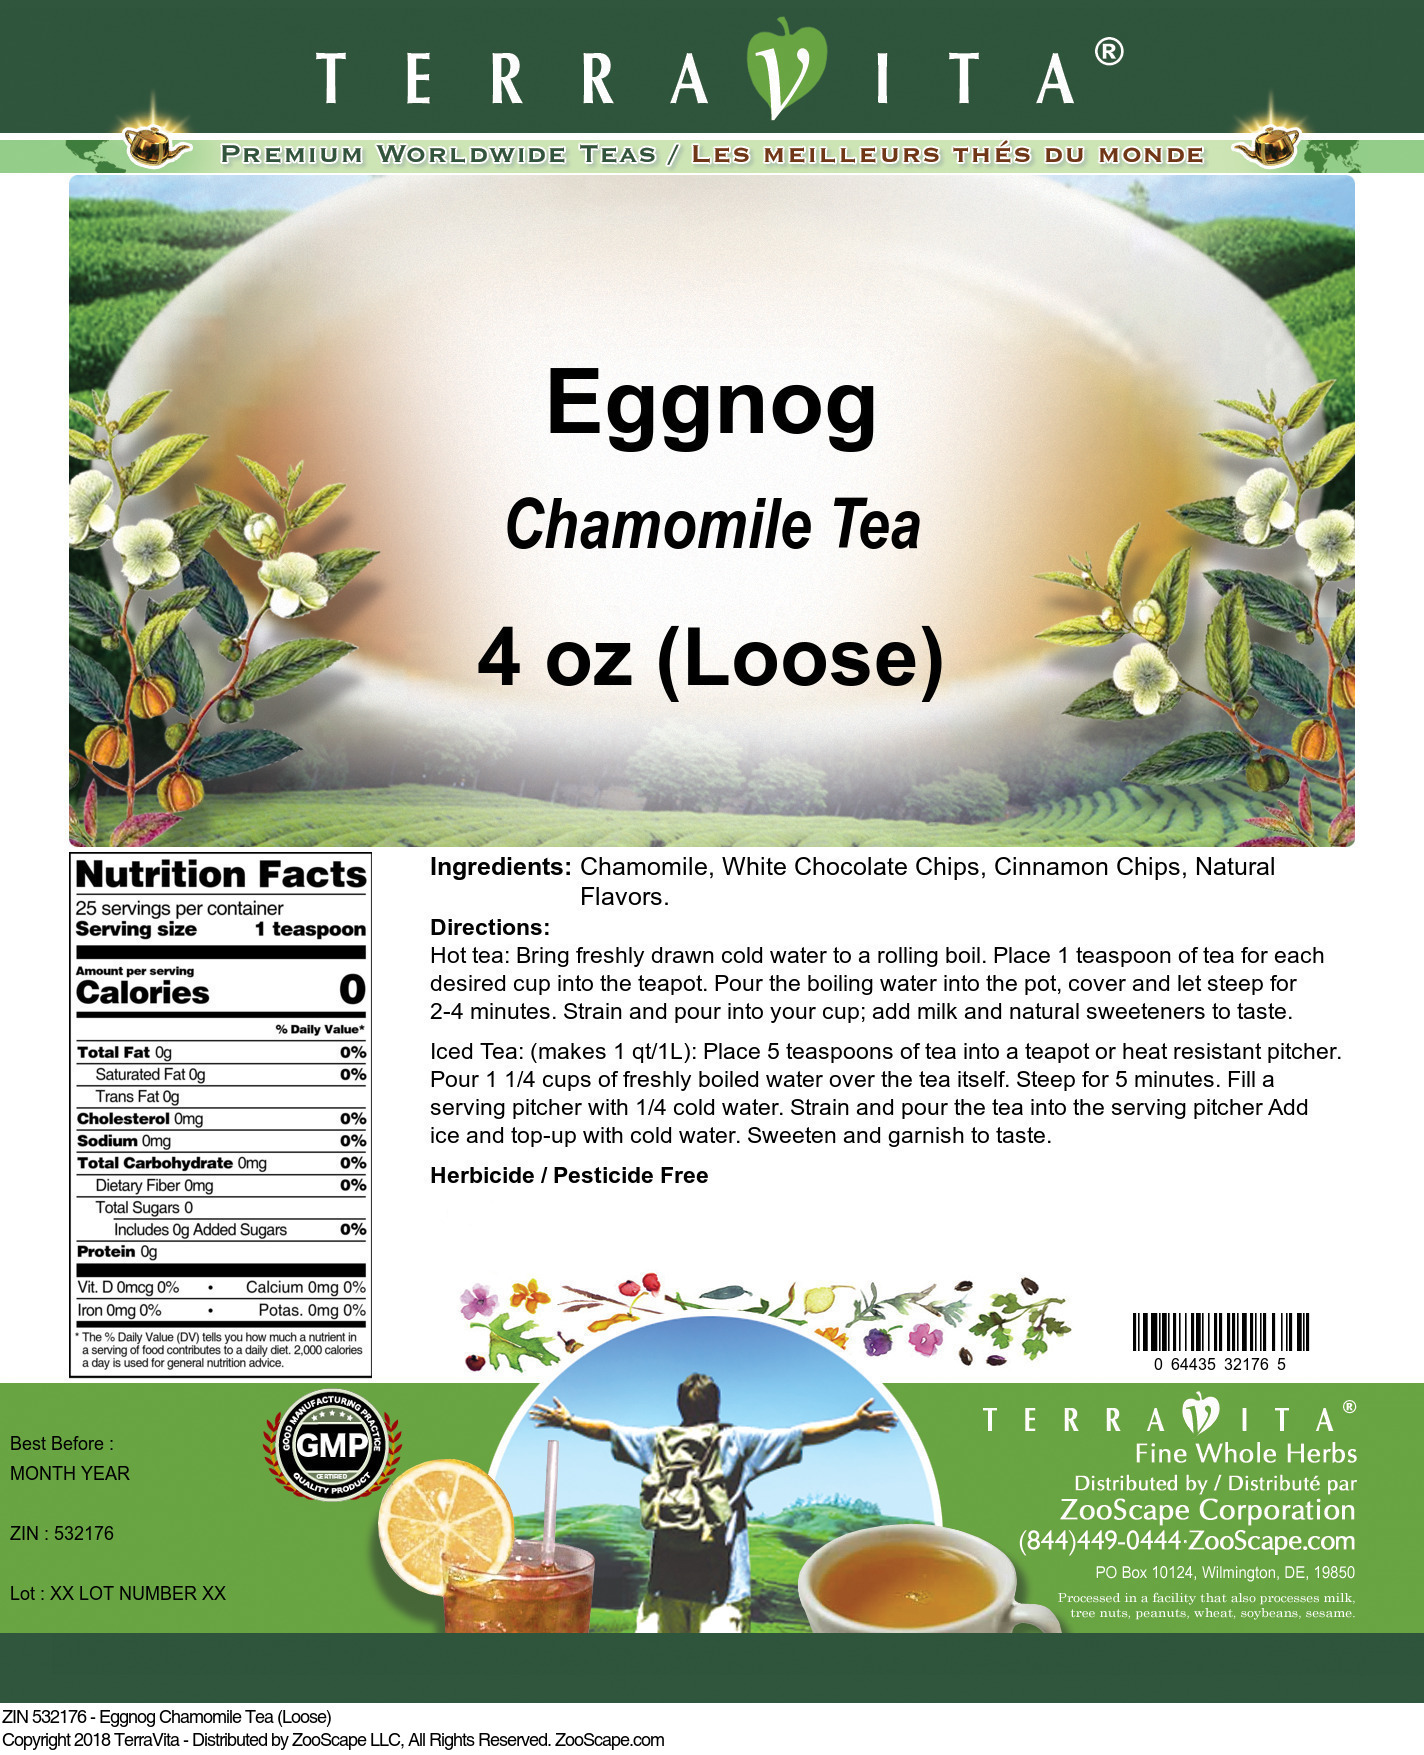 Eggnog Chamomile Tea (Loose) - Label